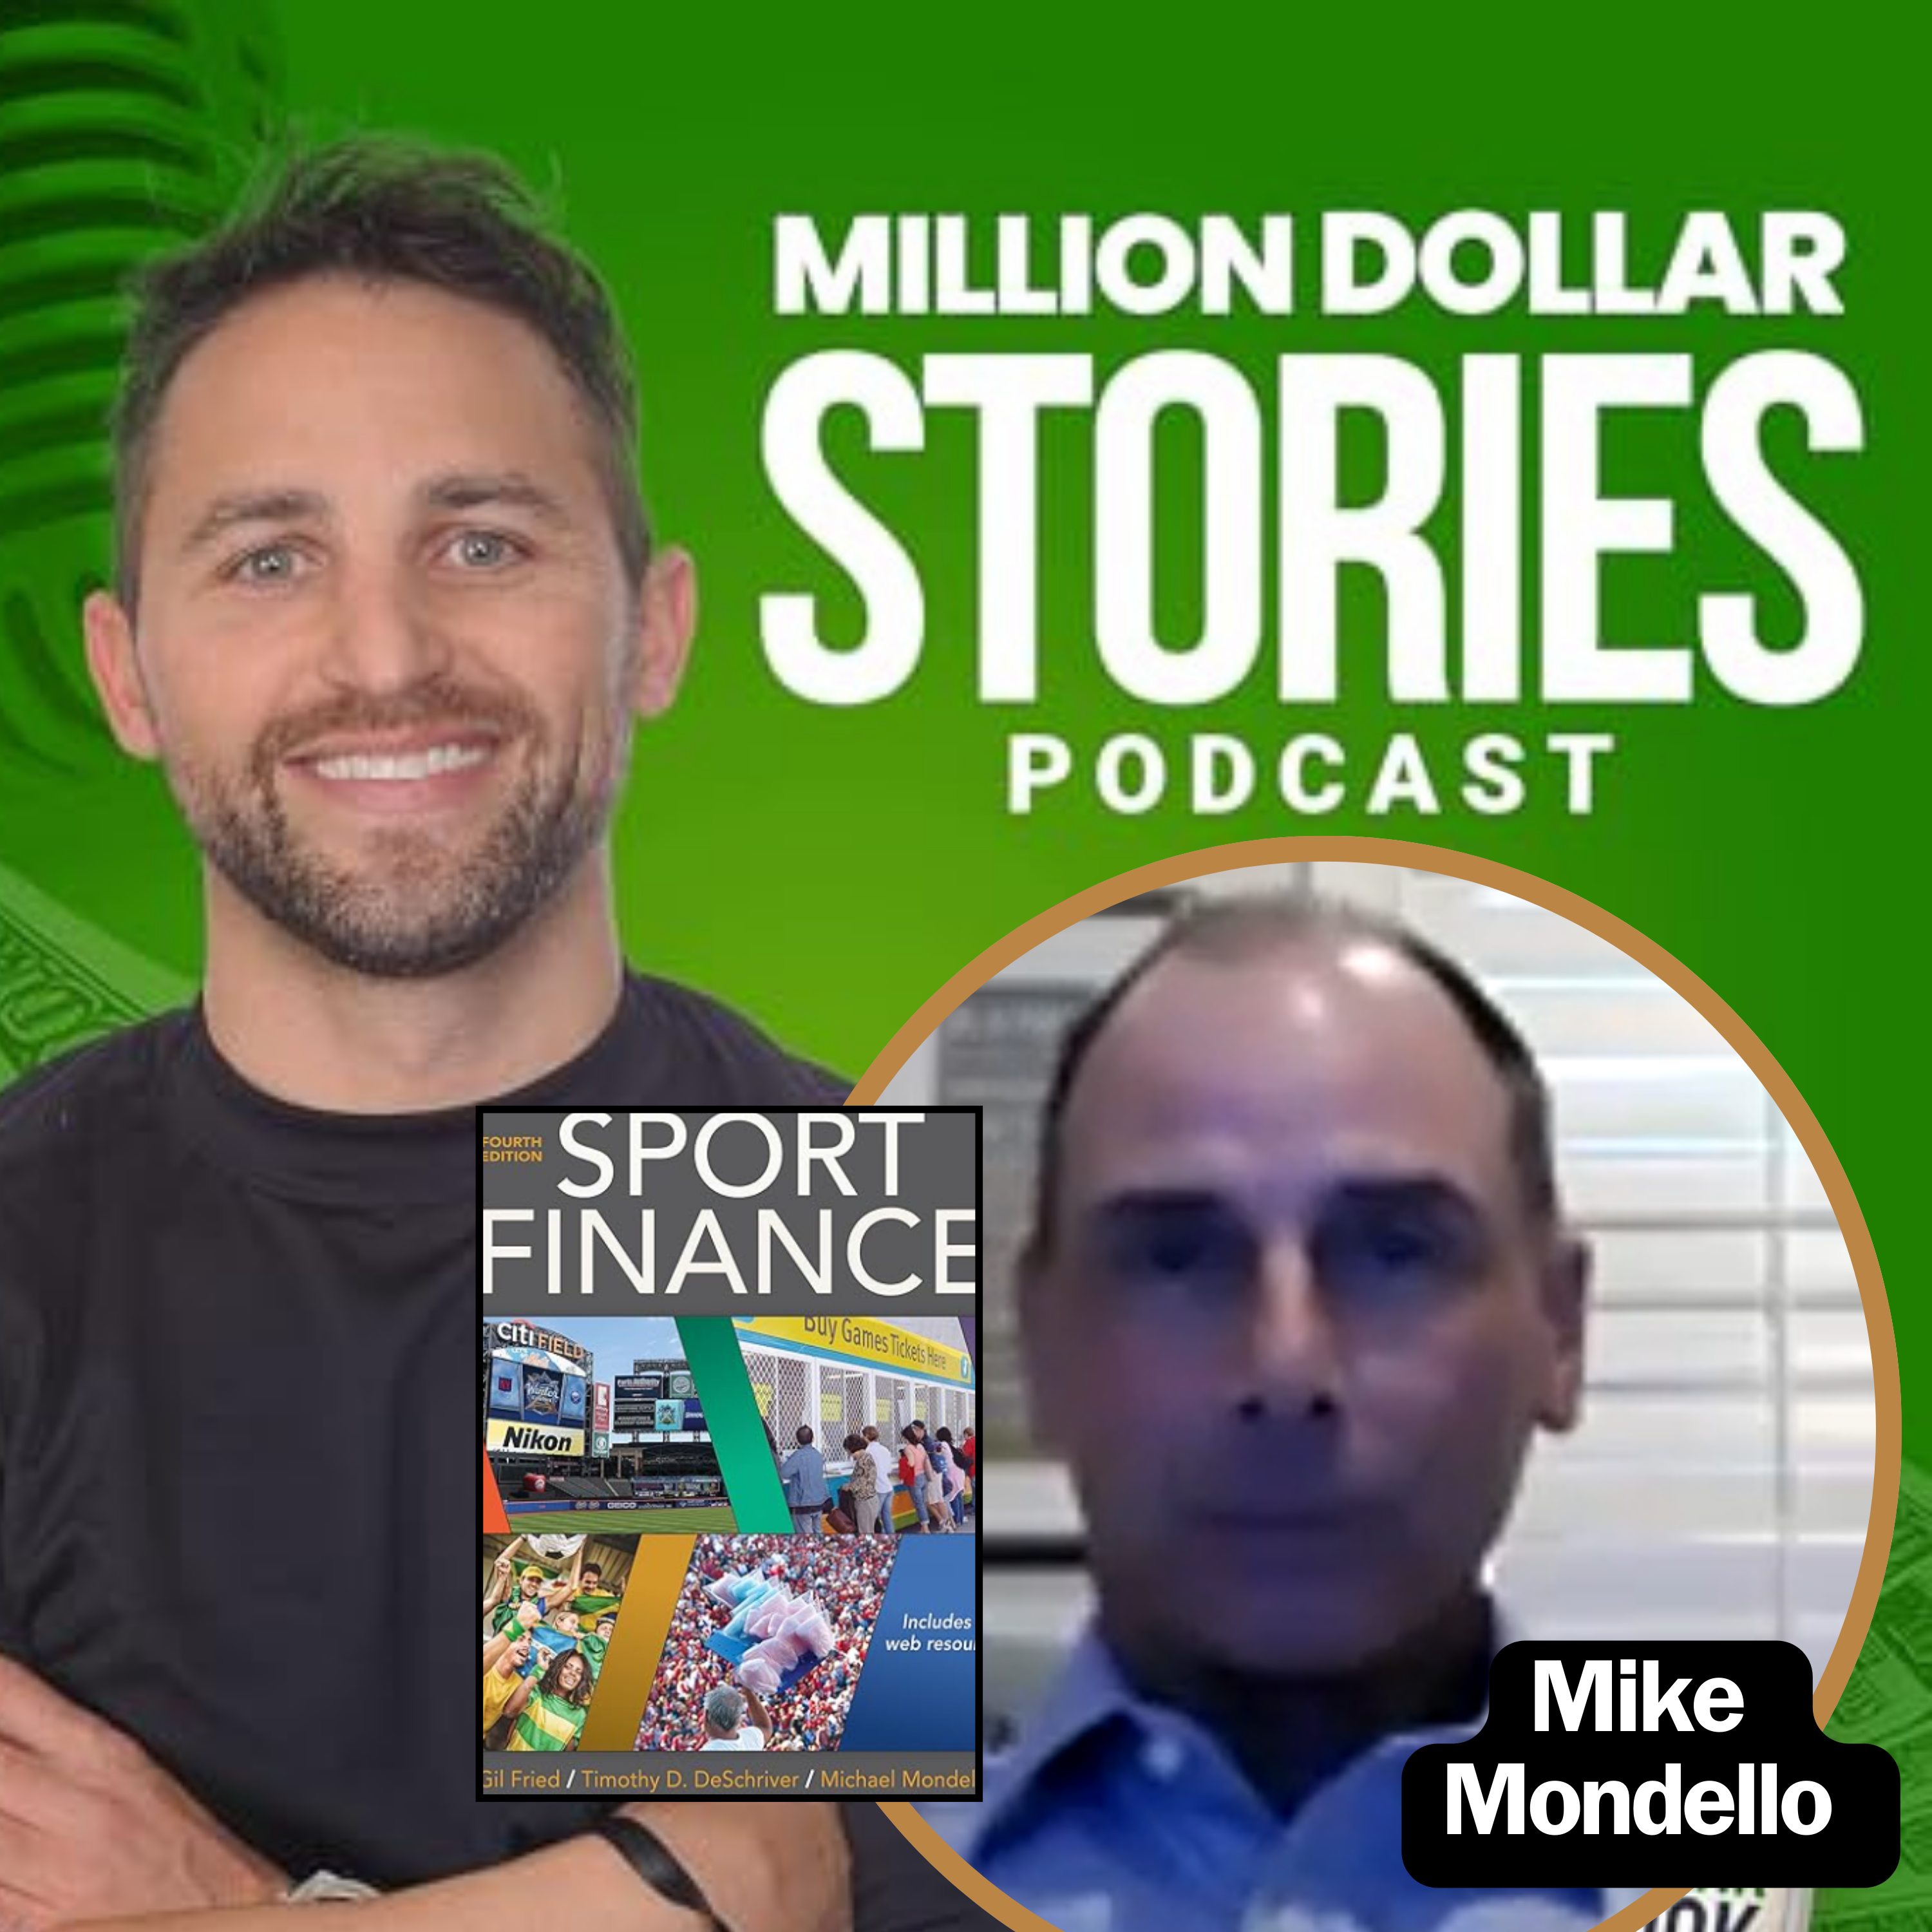 Mike Mondello – Author of “Sport Finance”